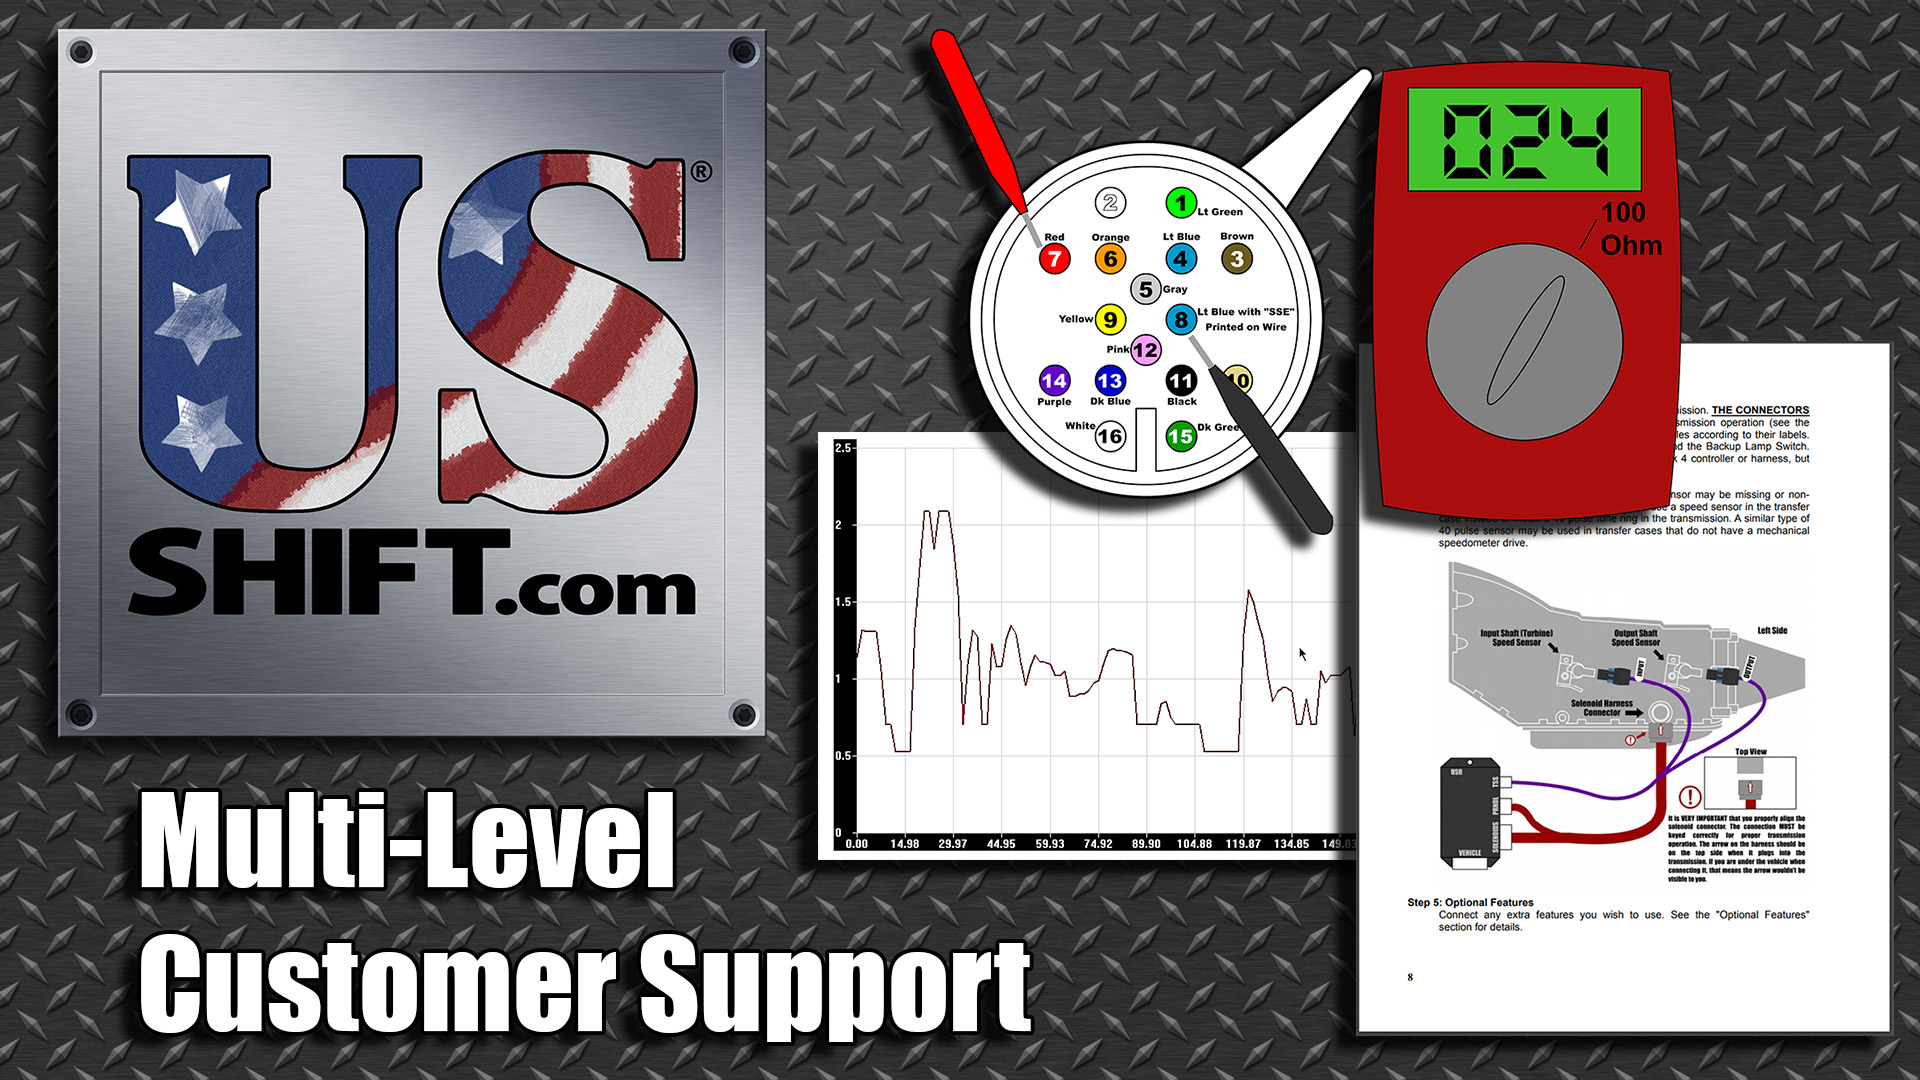 Multi-level customer support video